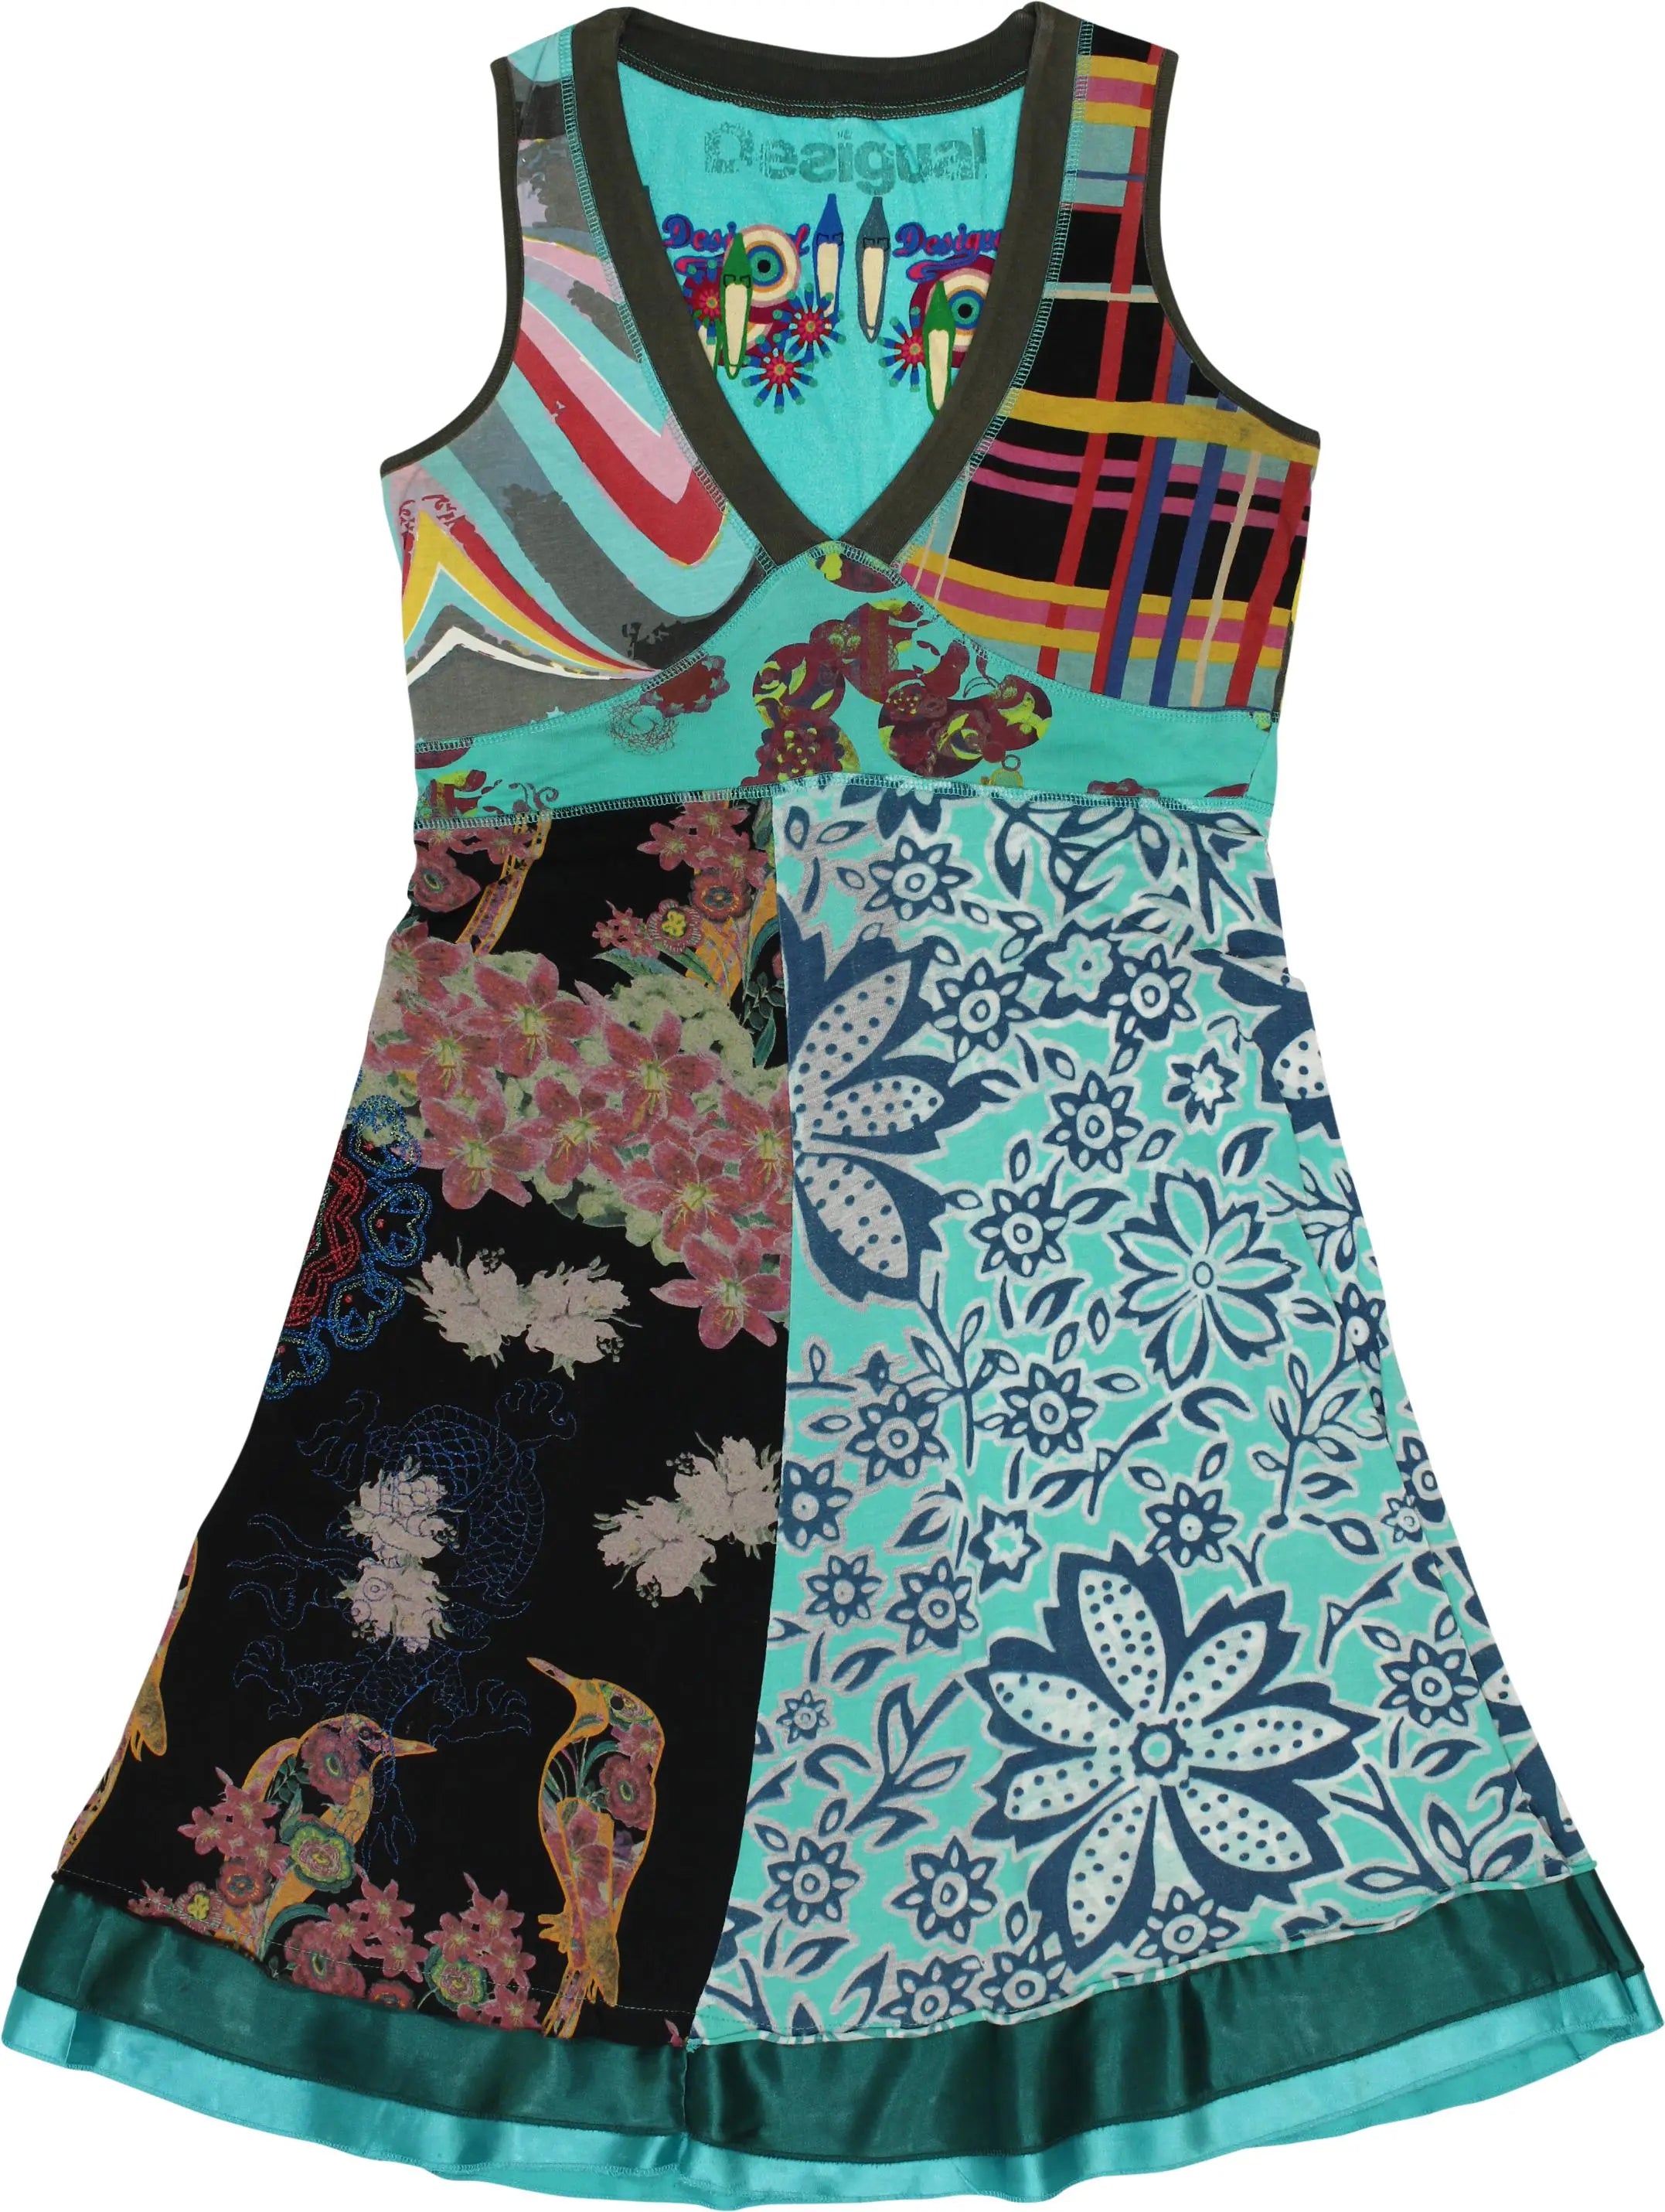 Desigual - Desigual Dress- ThriftTale.com - Vintage and second handclothing